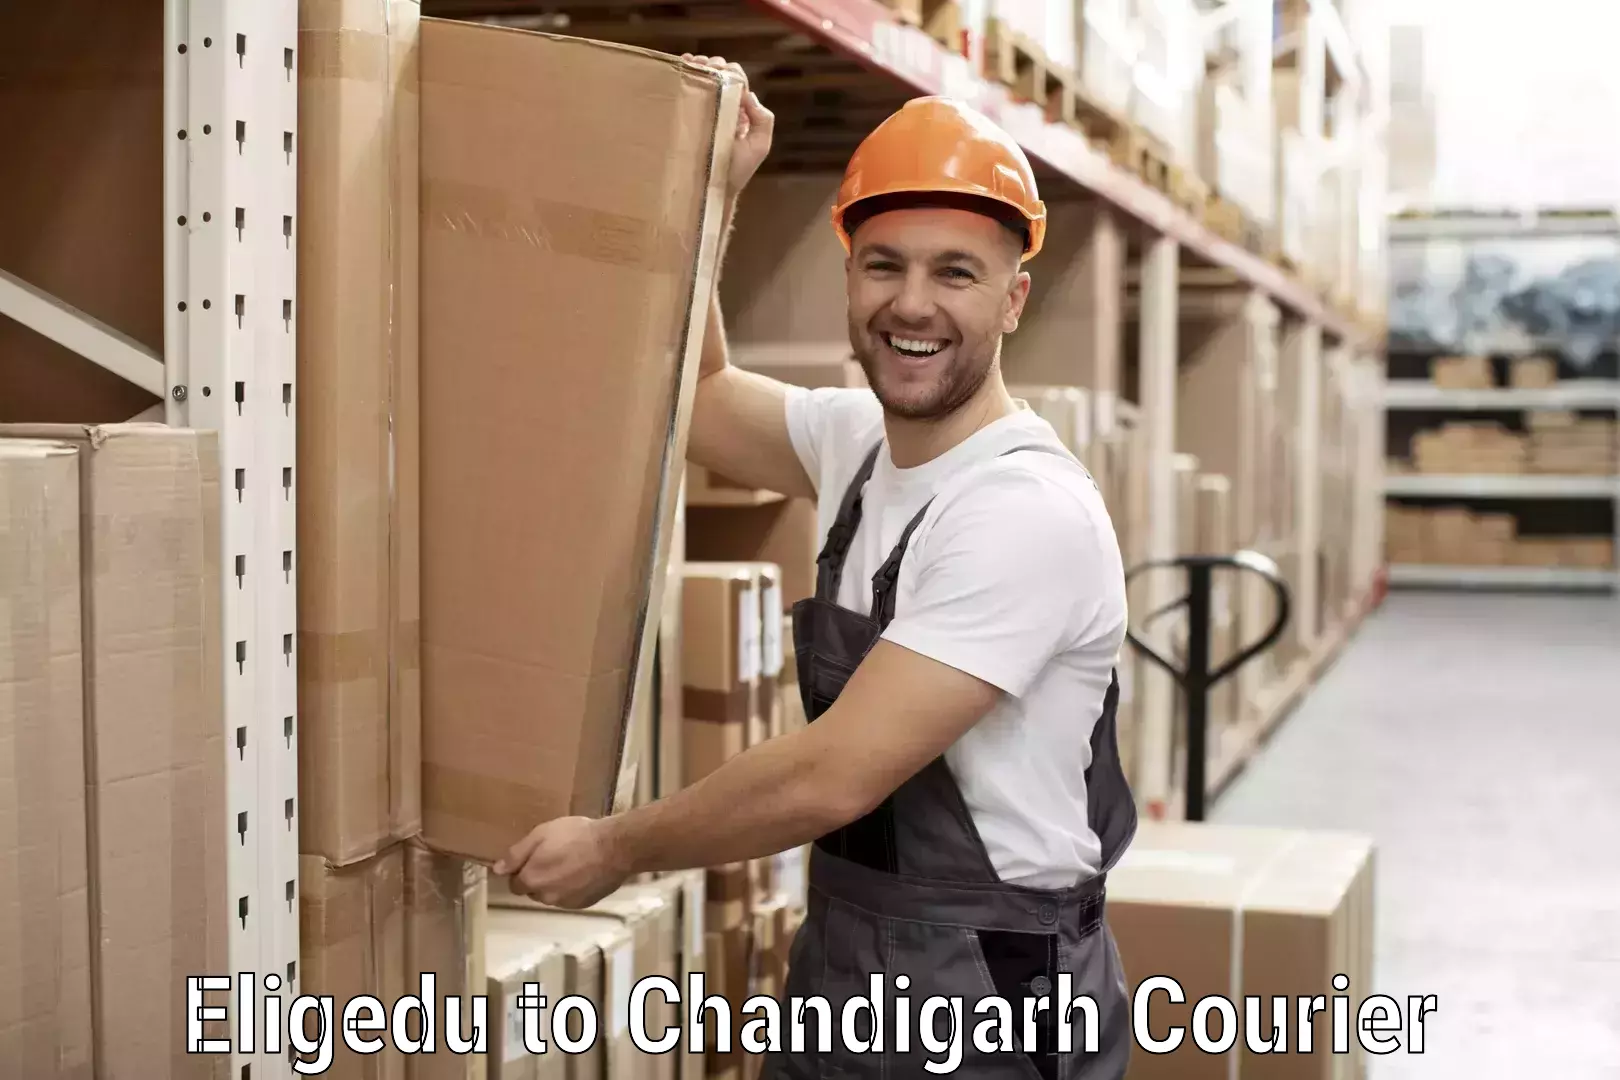 Courier service partnerships Eligedu to Panjab University Chandigarh